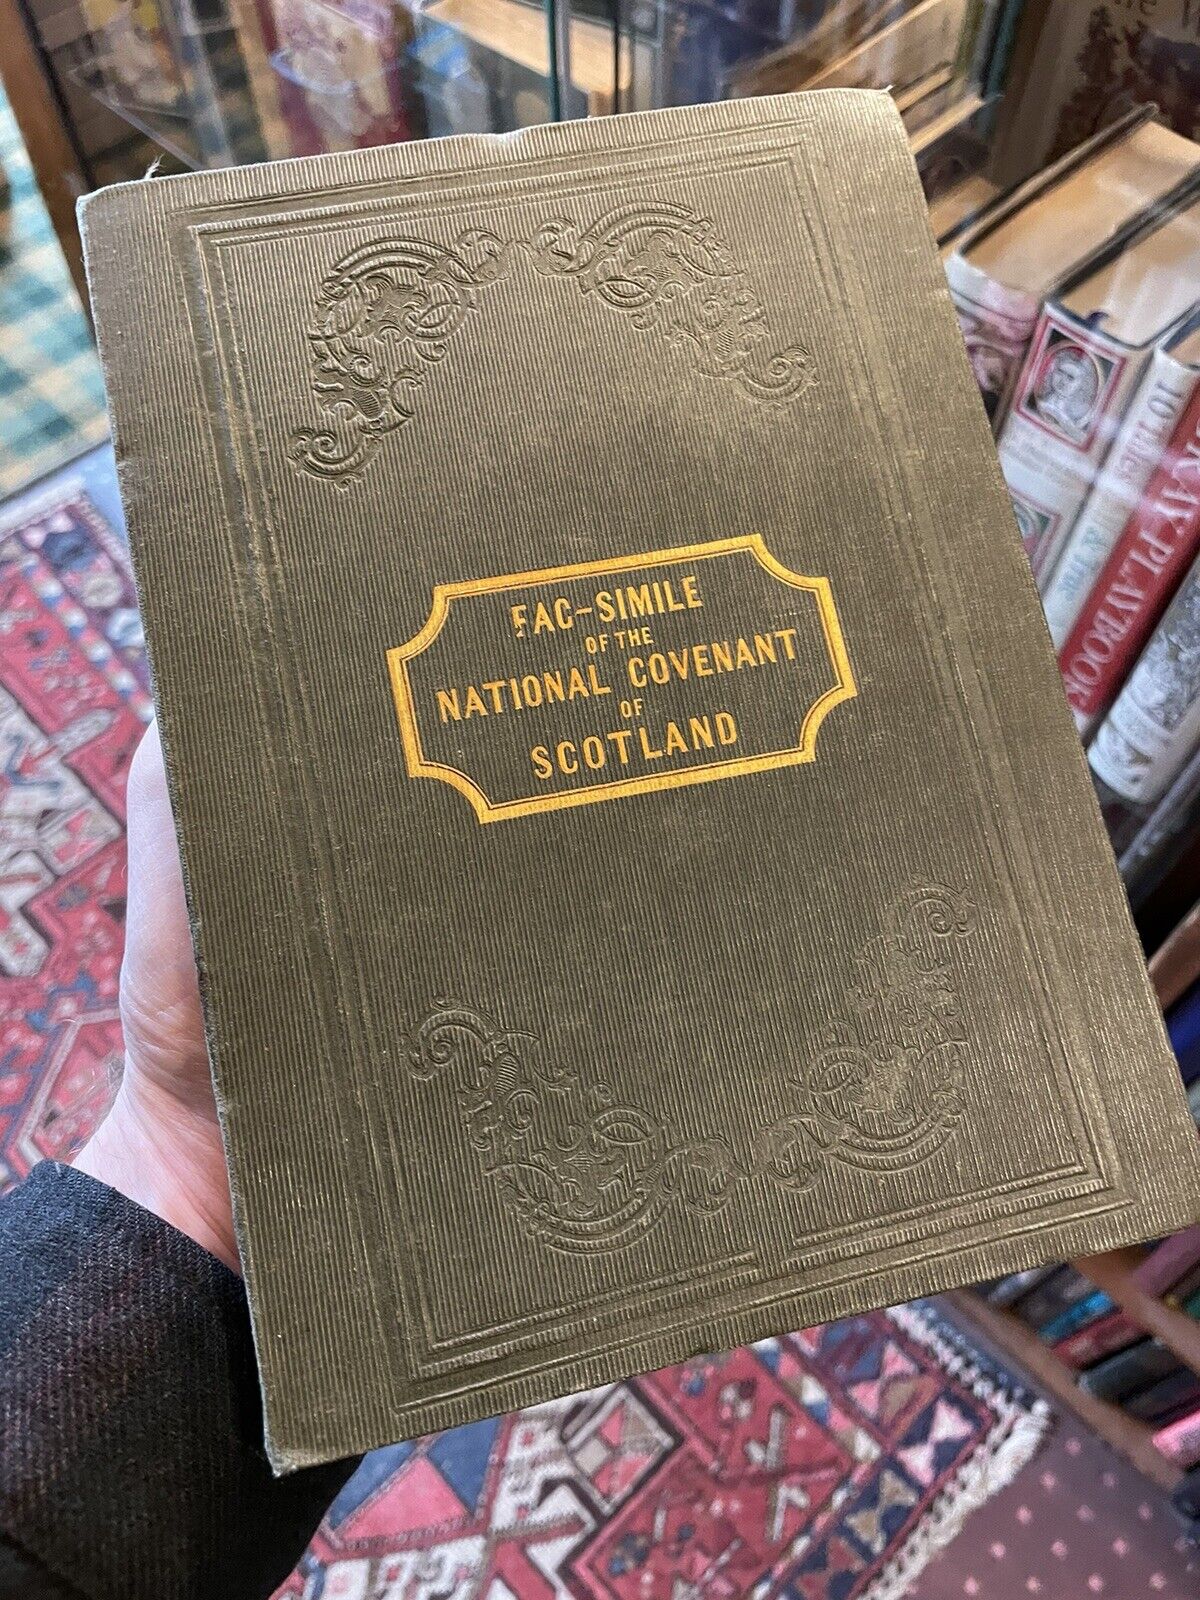 The National Covenant of Scotland : Large Fold-out Facsimile c1870 James Aikman